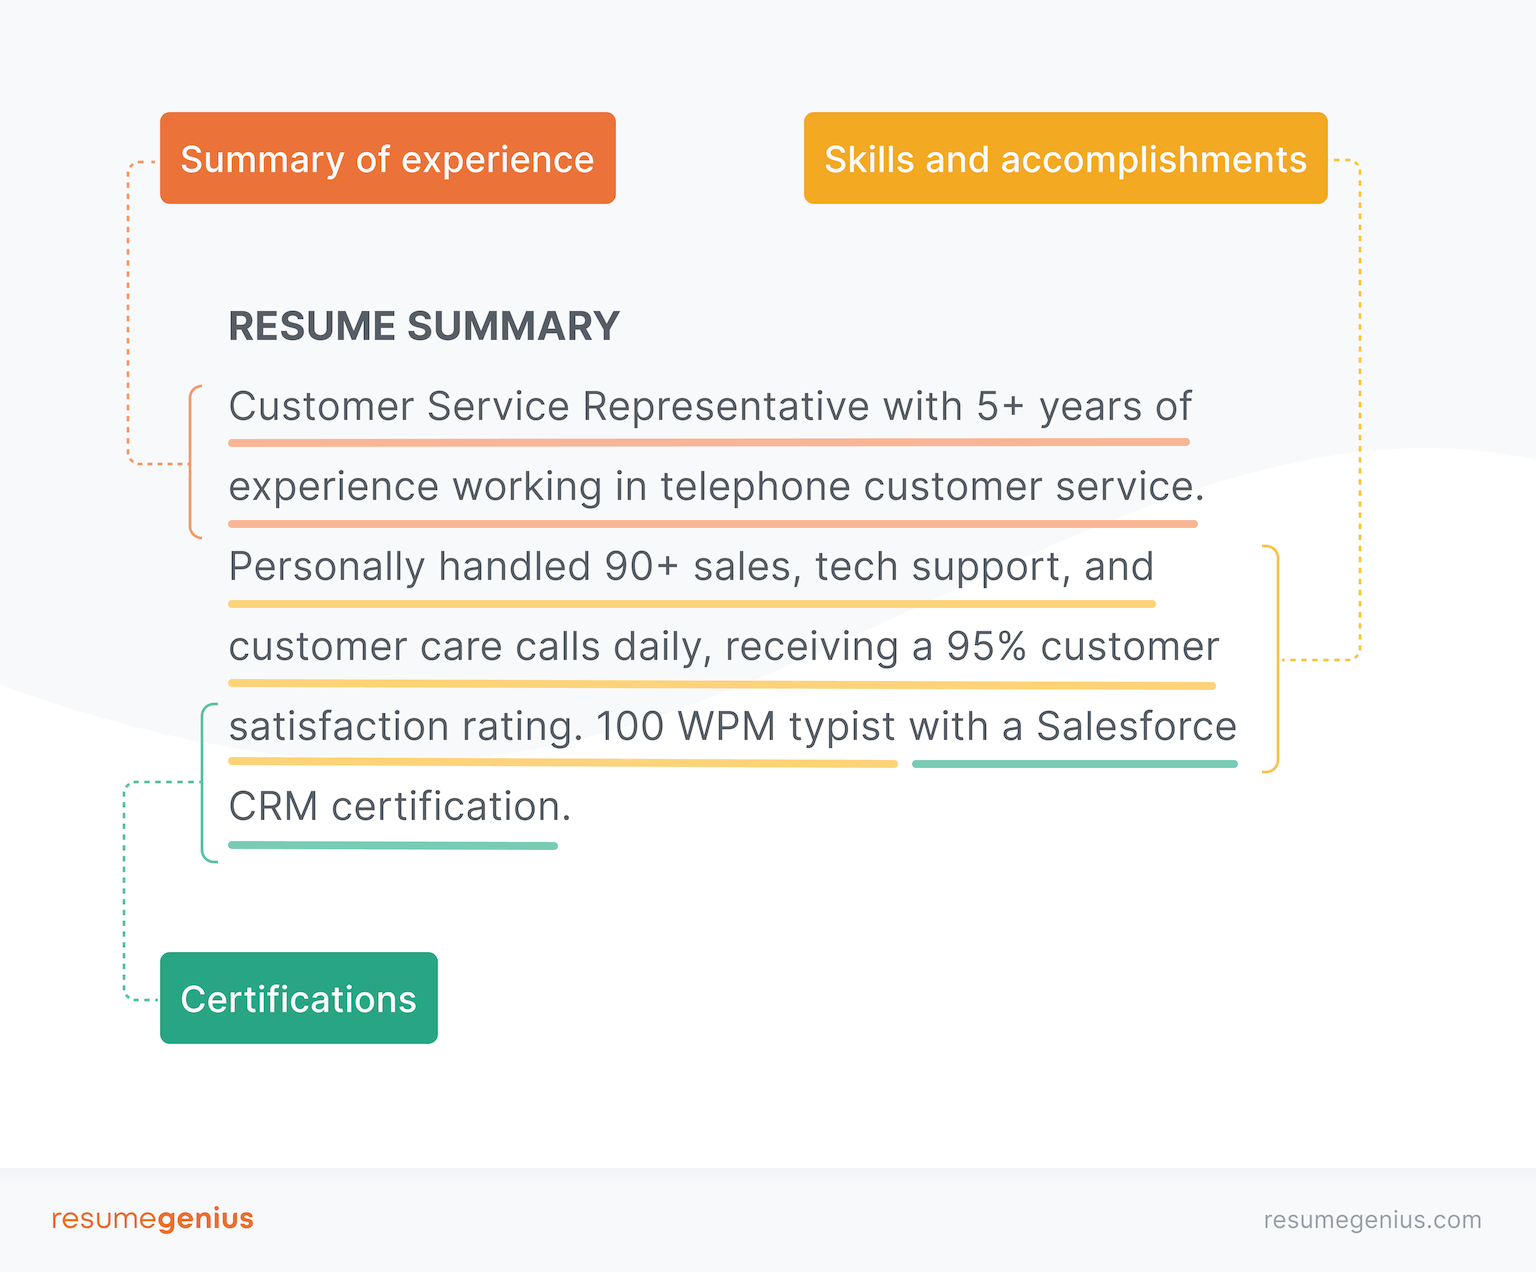 Resume Summary Infographic